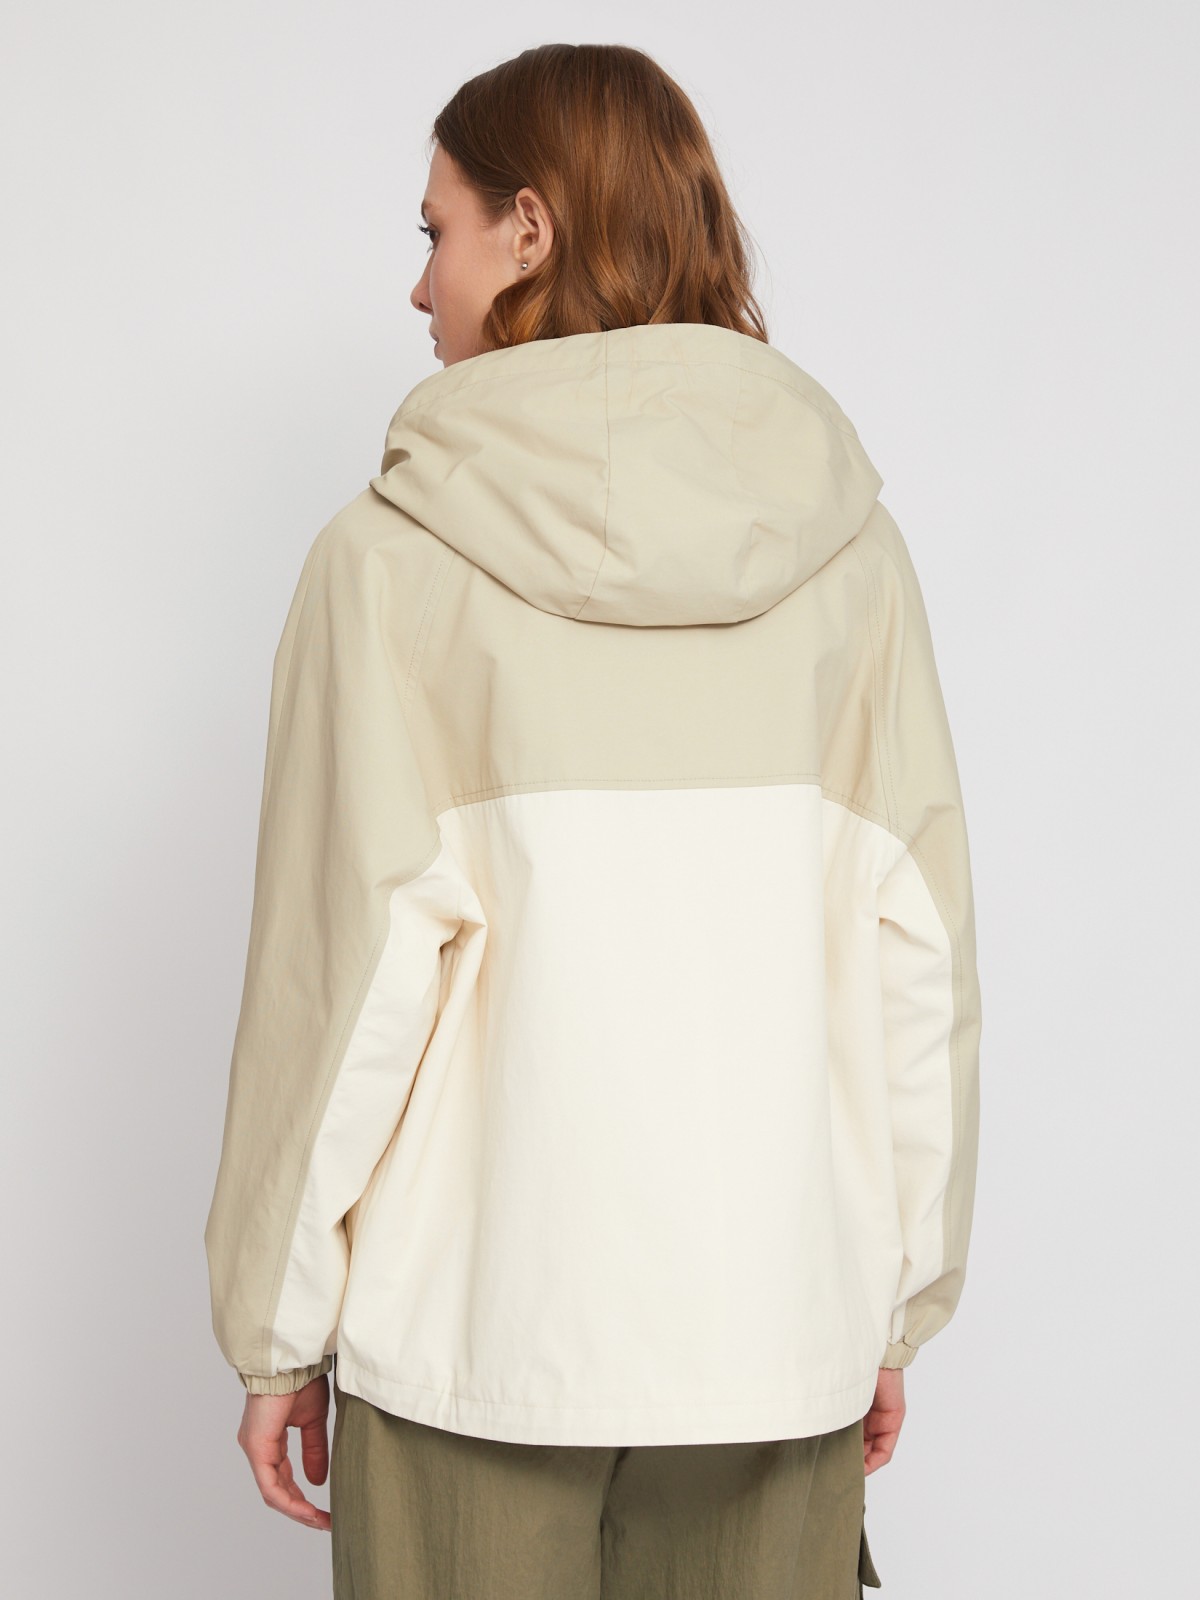 Куртка-ветровка на молнии с капюшоном zolla 024215661164, цвет хаки, размер XS - фото 6